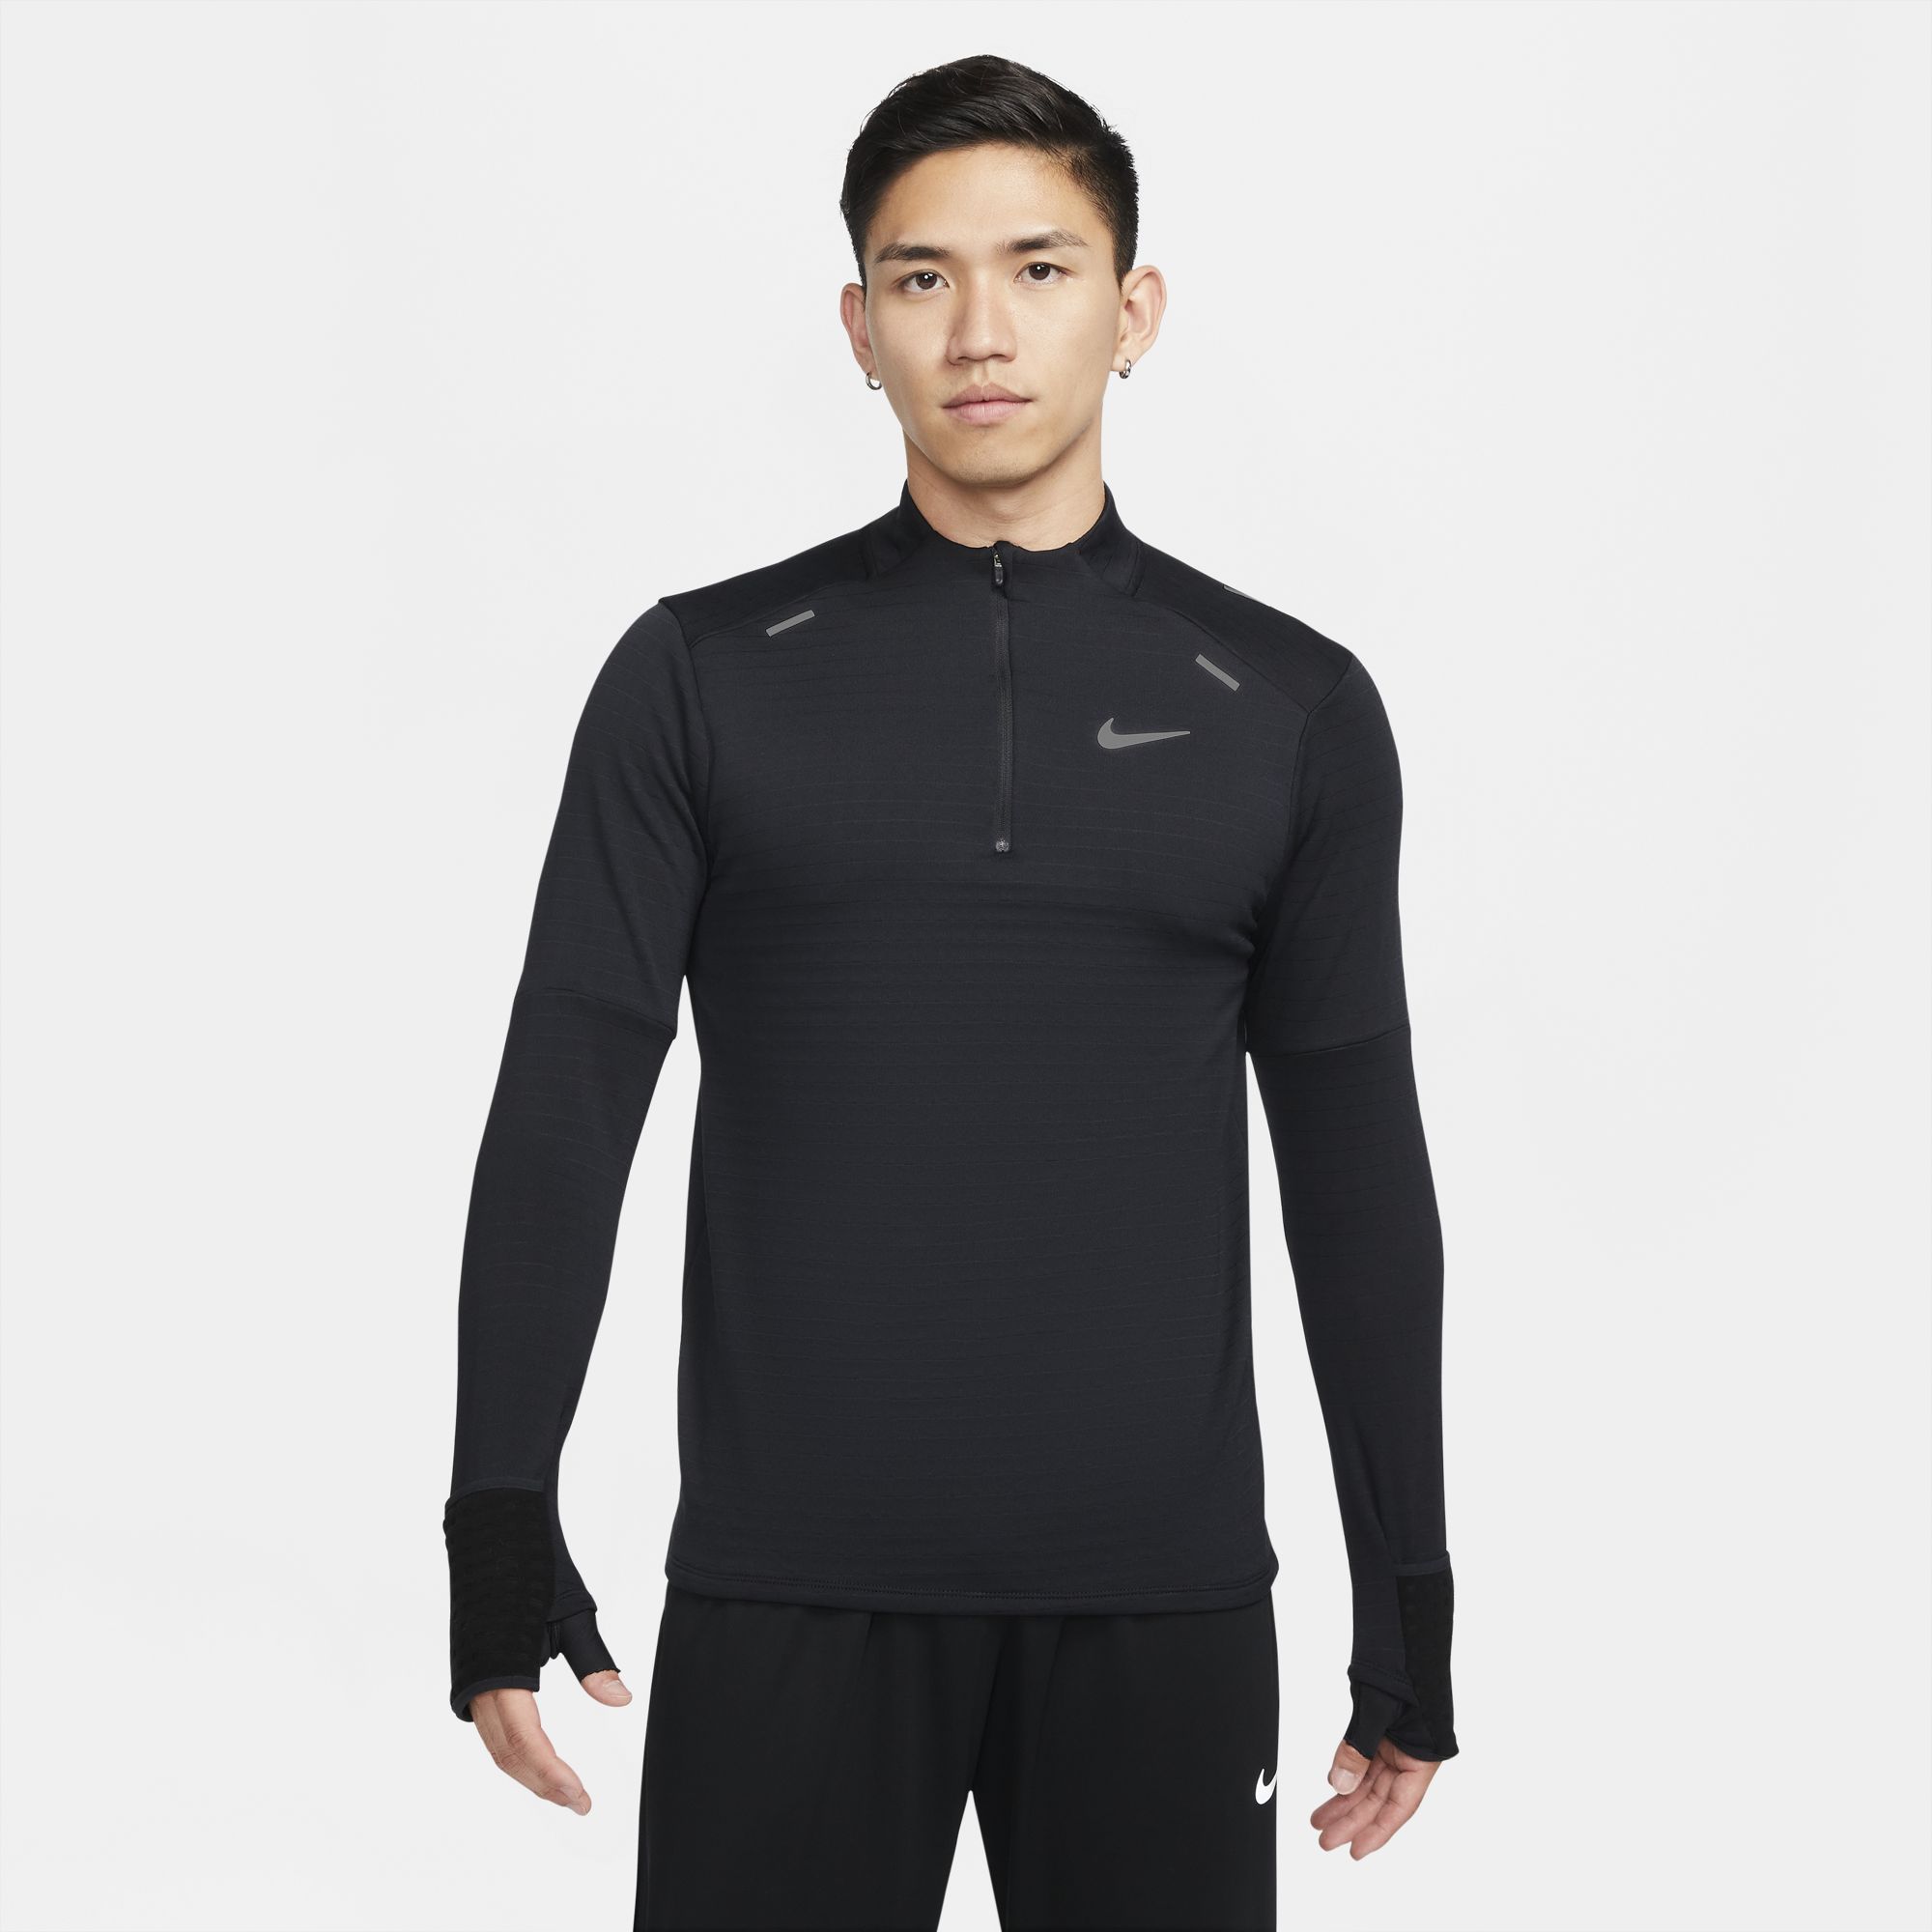 Nike Men's Therma-FIT Repel Element 1/2 Zip Top - Black/Reflective Silv ...